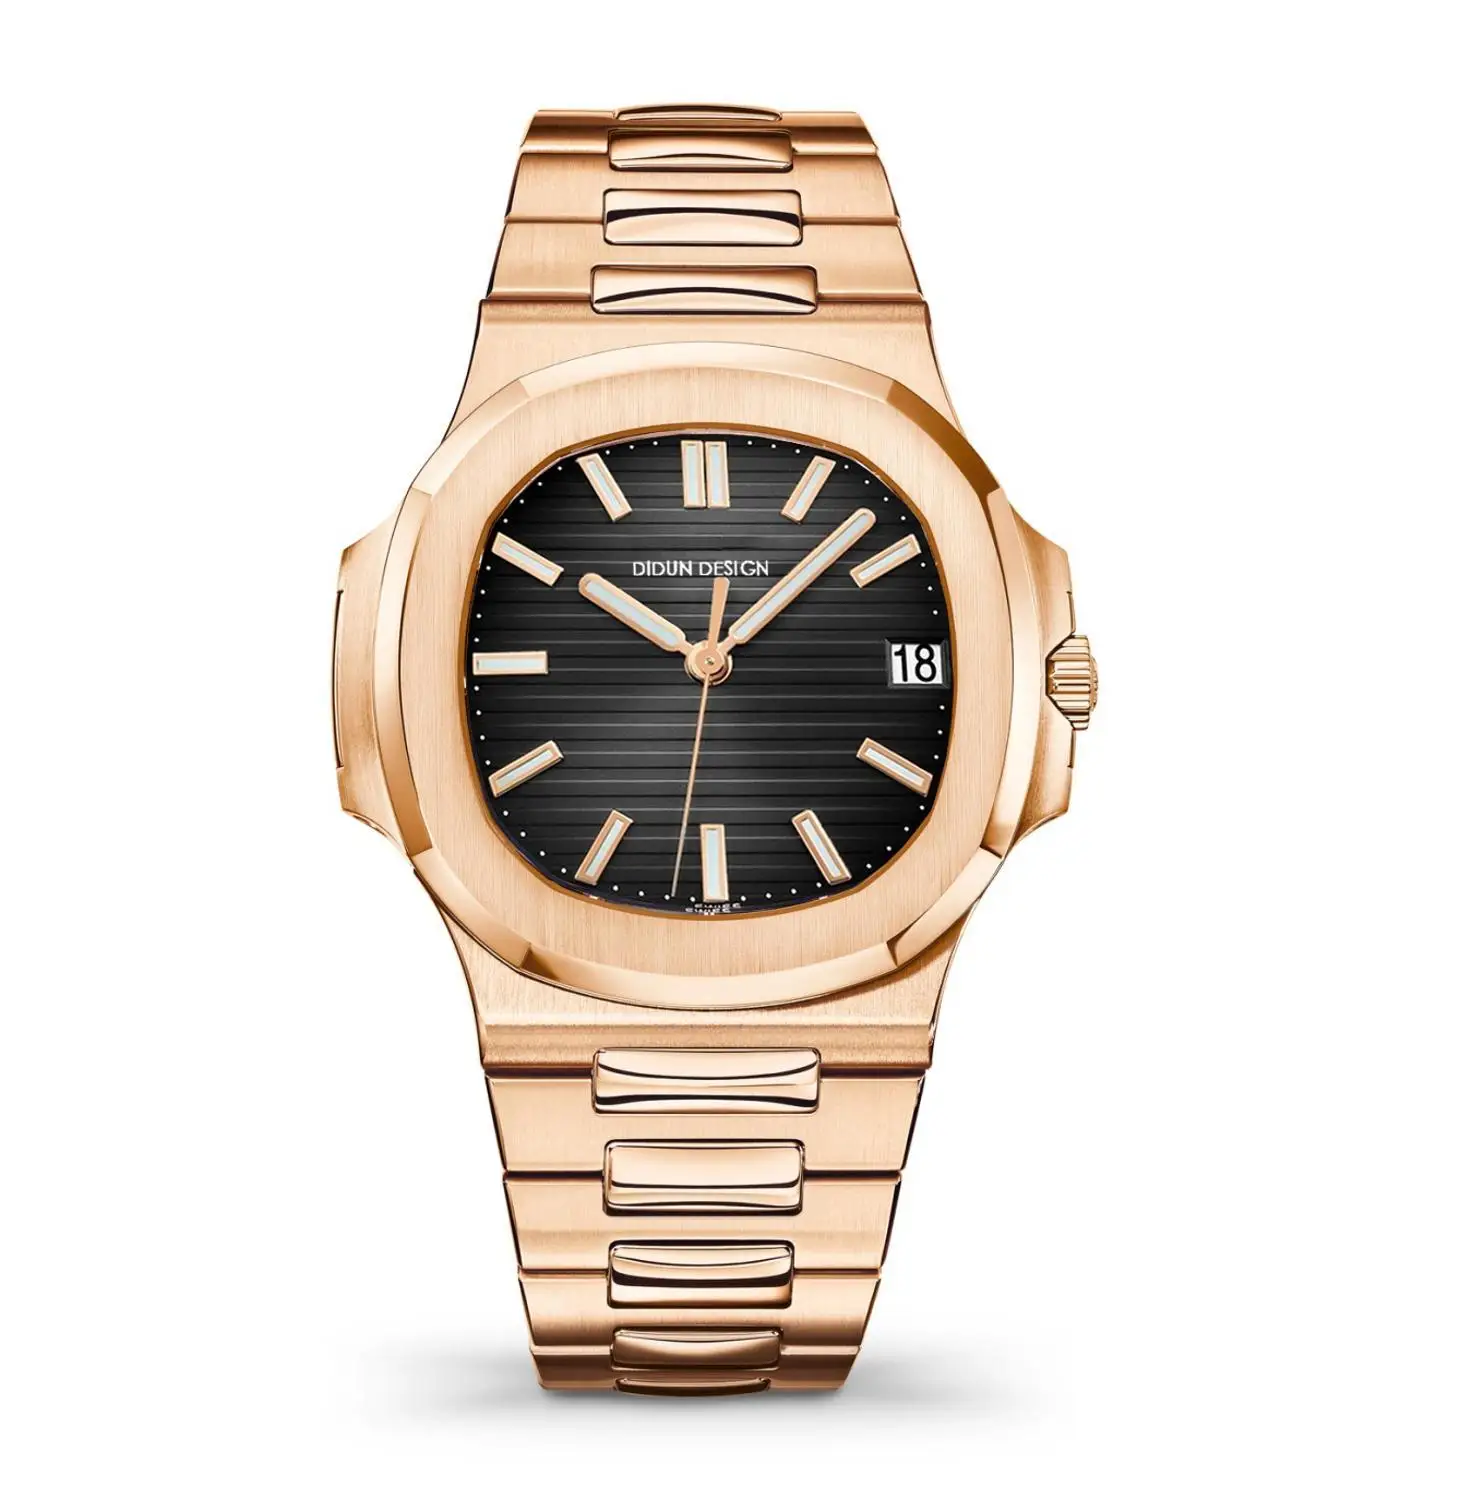 

DIDUN DESIGN MEN Luxury Watches Top Brand JAPAN Quartz Watch maleBusiness reloj hombre Military WristWatch Water Resistant Clock